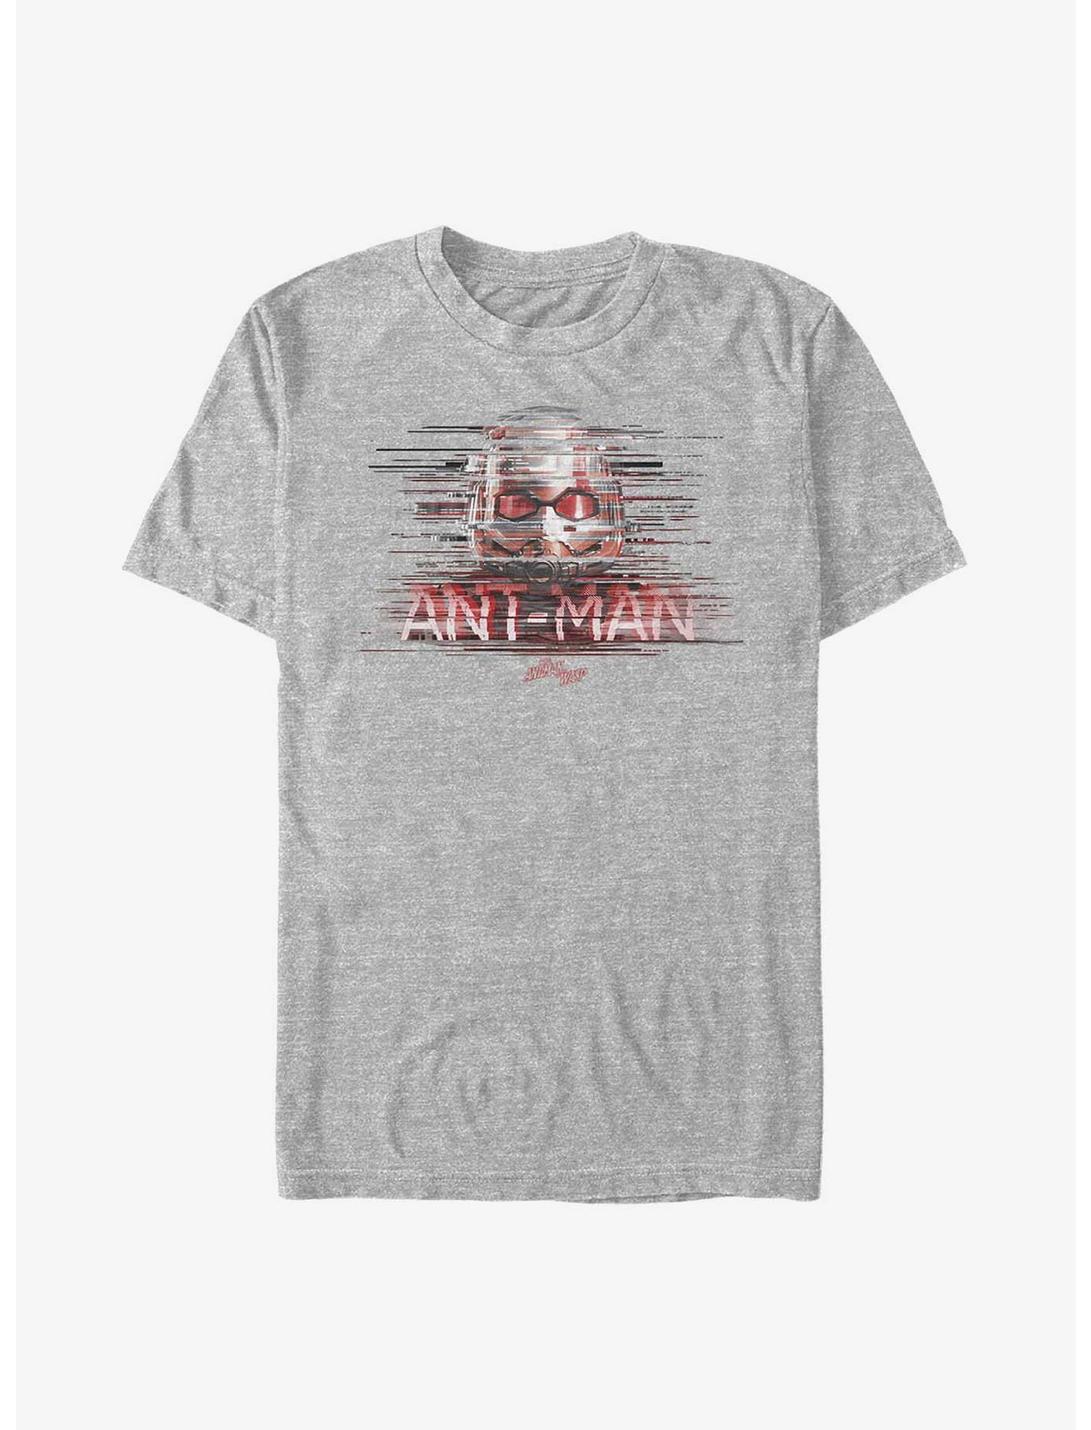 Marvel Ant-Man Distorted T-Shirt, ATH HTR, hi-res